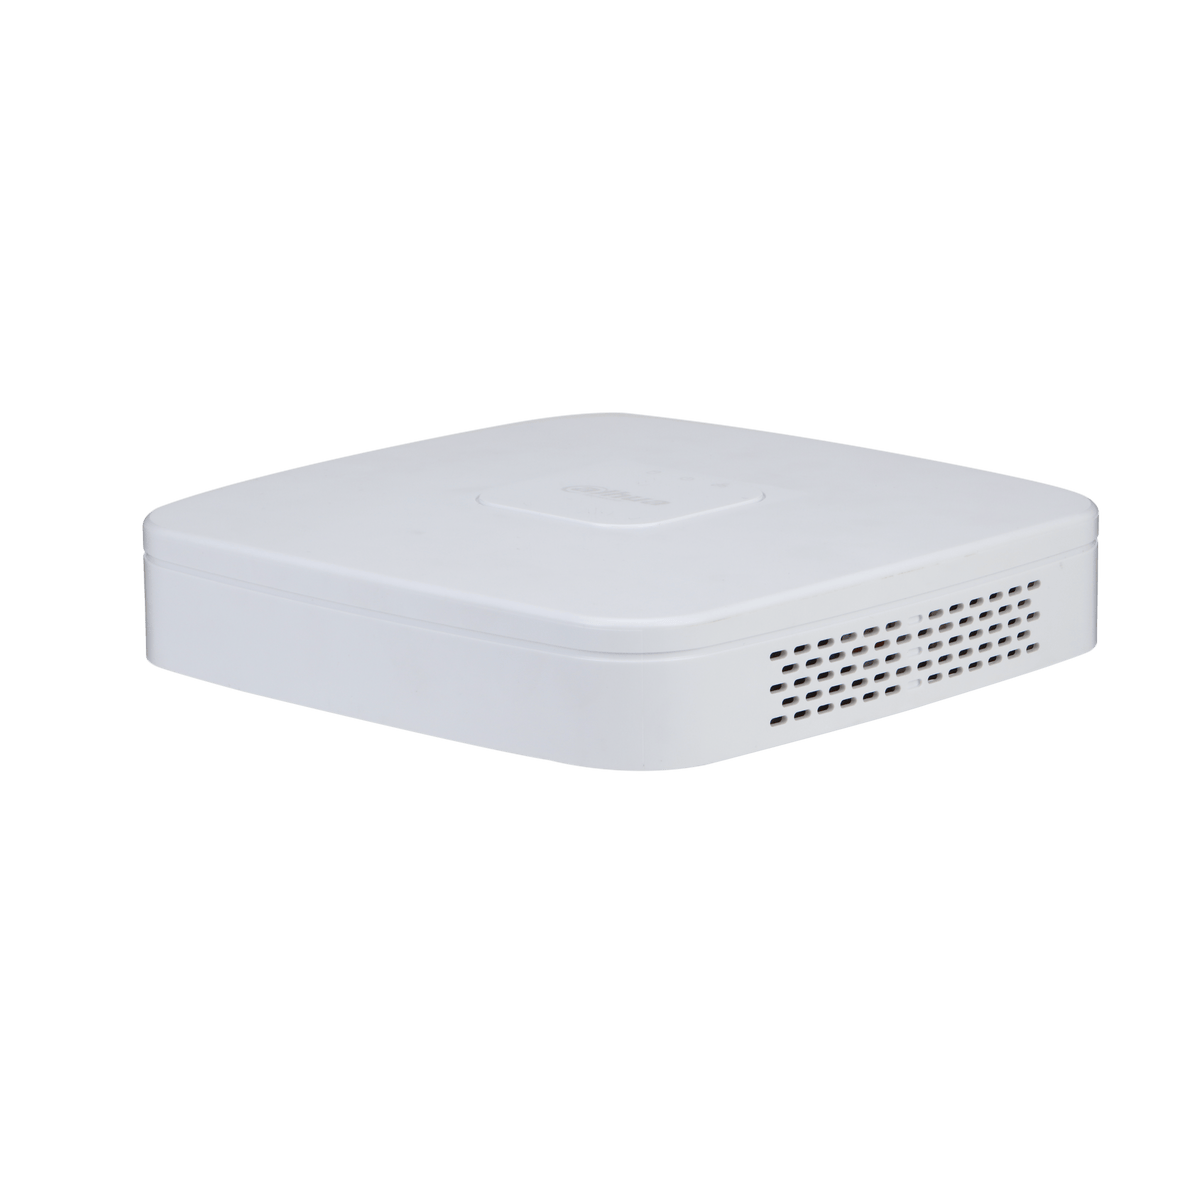 Dahua 4 Channel Smart 1U 1HDD 4PoE Network Video Recorder DHI-NVR4104-P-4KS2/L